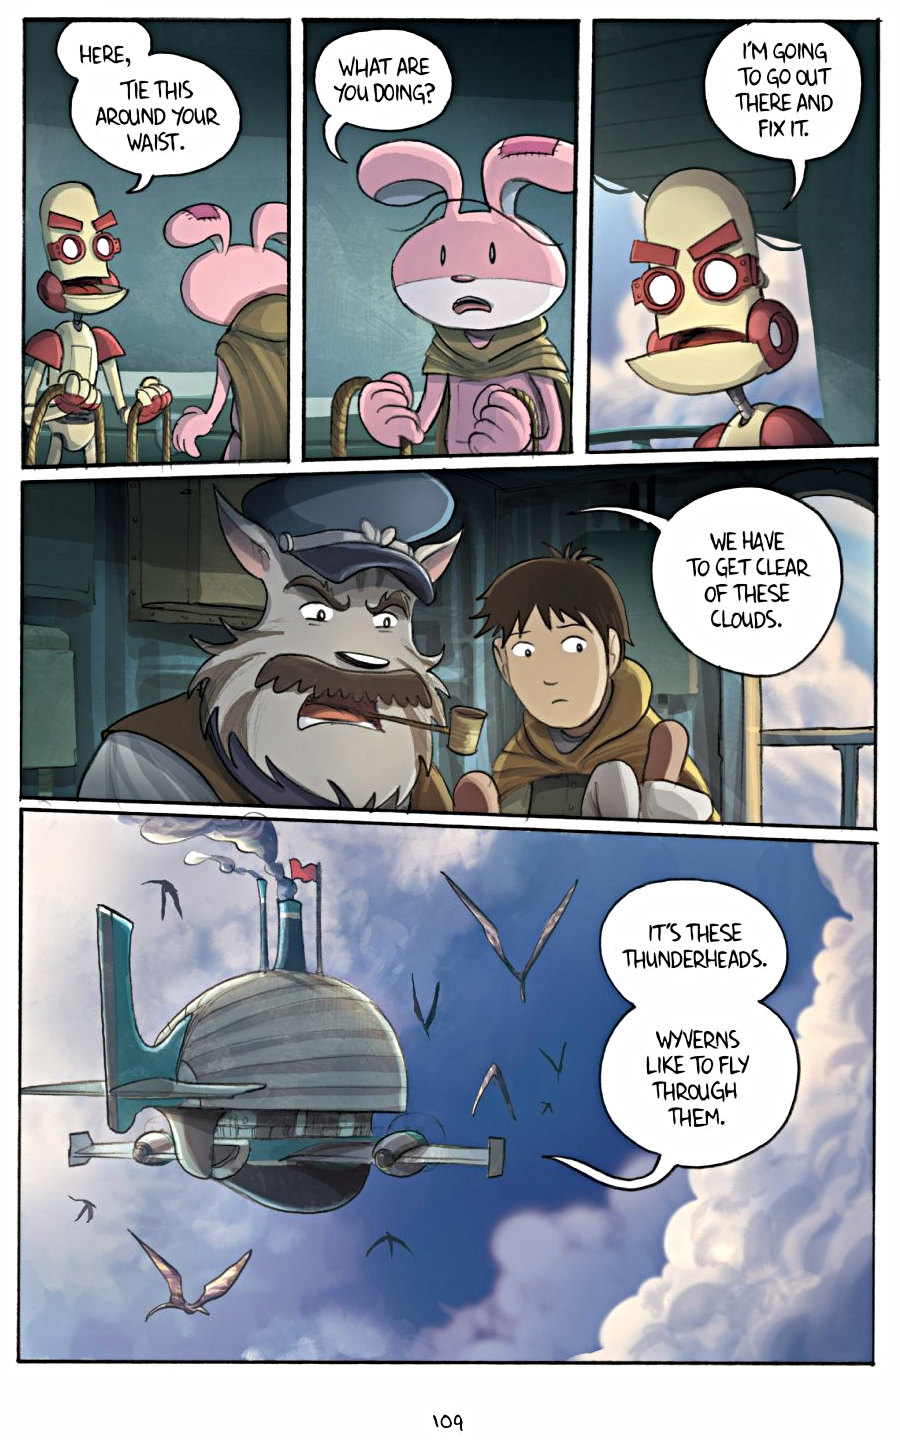 page 109 of amulet 3 cloud searchers graphic novel by kazu kibuishi